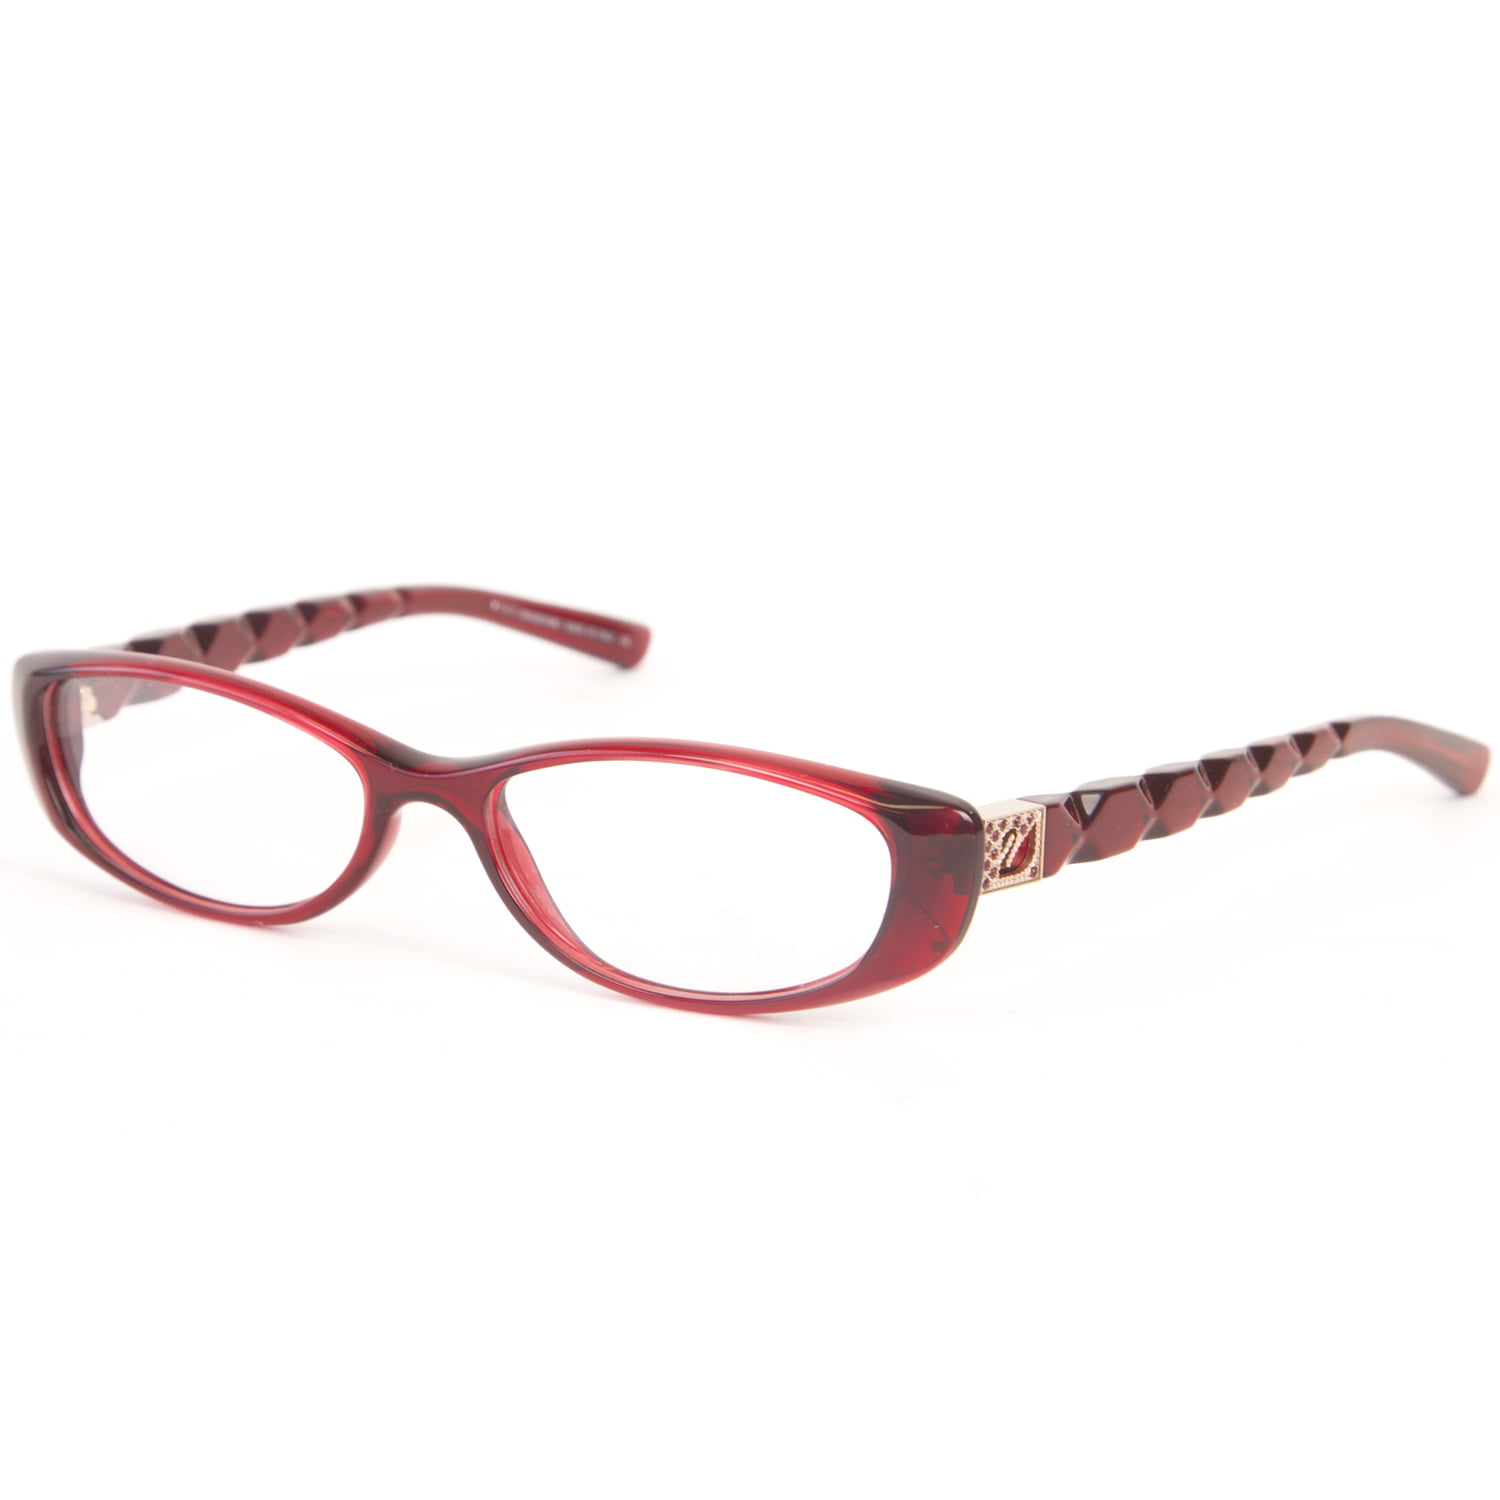 SWAROVSKI Sunglasses Eyeglasses LARGE YELLOW HARD CASE & SWAN CLEANING  CLOTH New | eBay